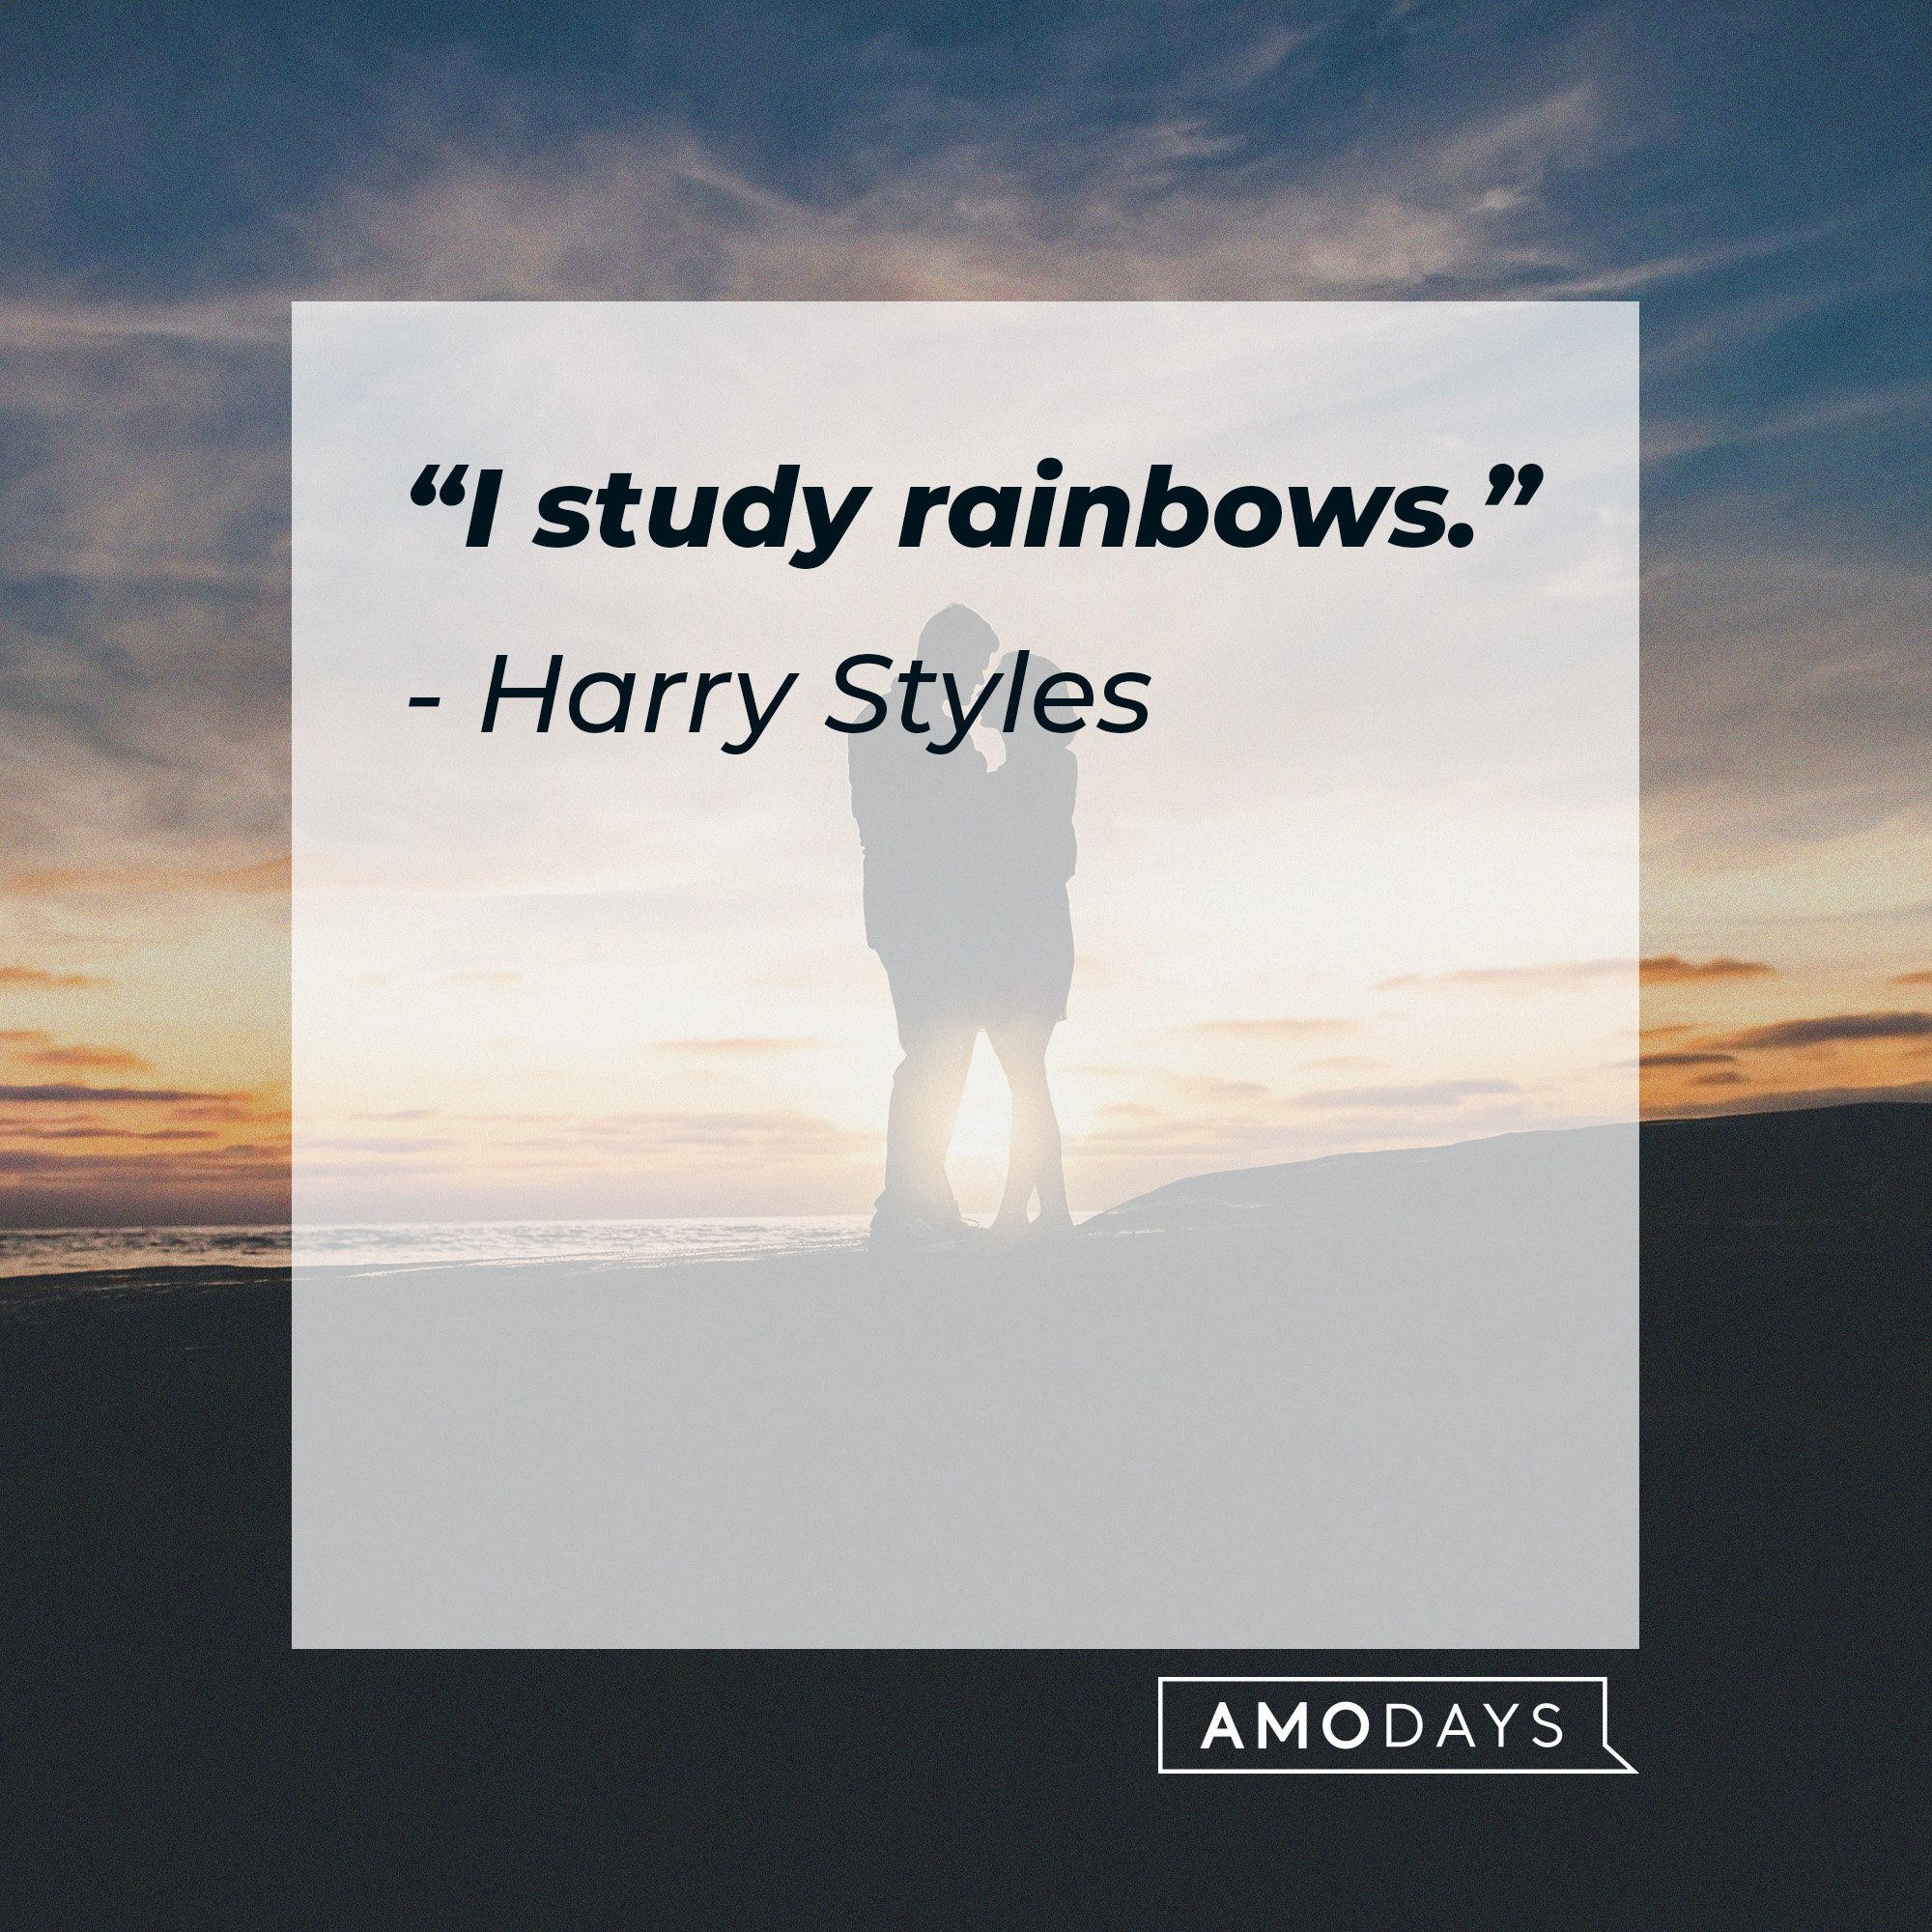 Harry Styles’ quote: “I study rainbows.” |  Source: AmoDays